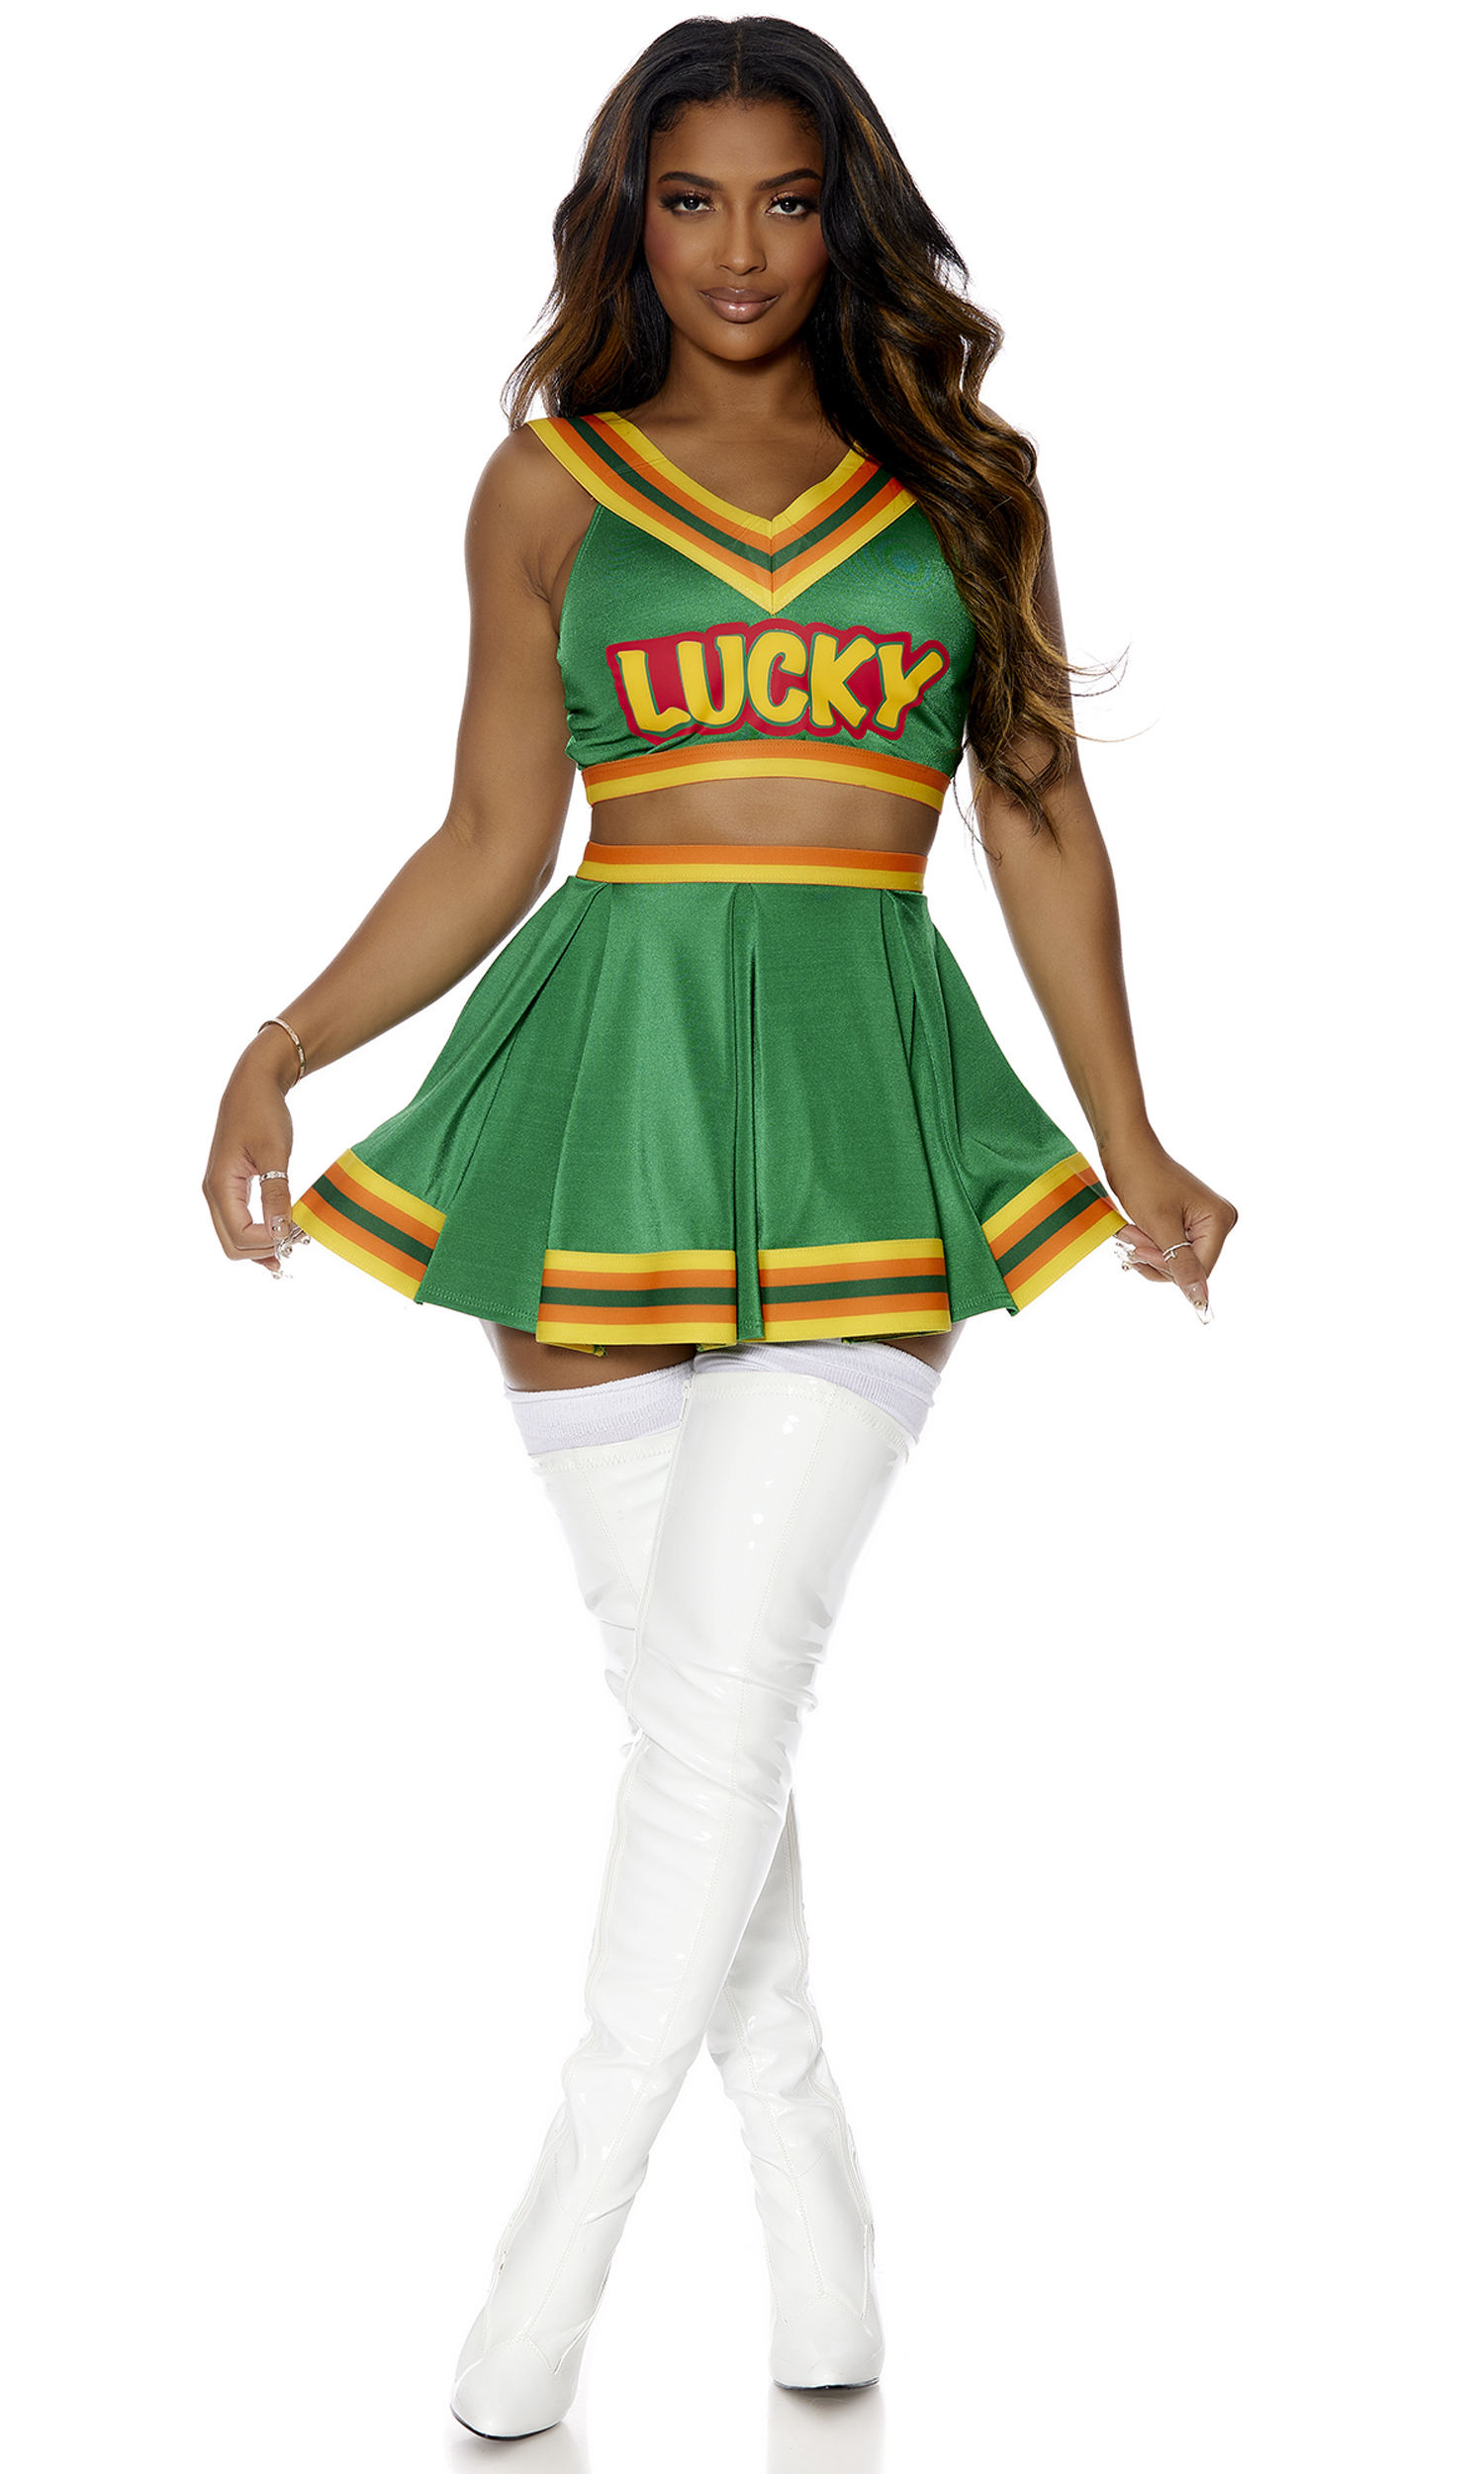 Adult Lucky Clover Woman Cheerleader Costume, $55.99